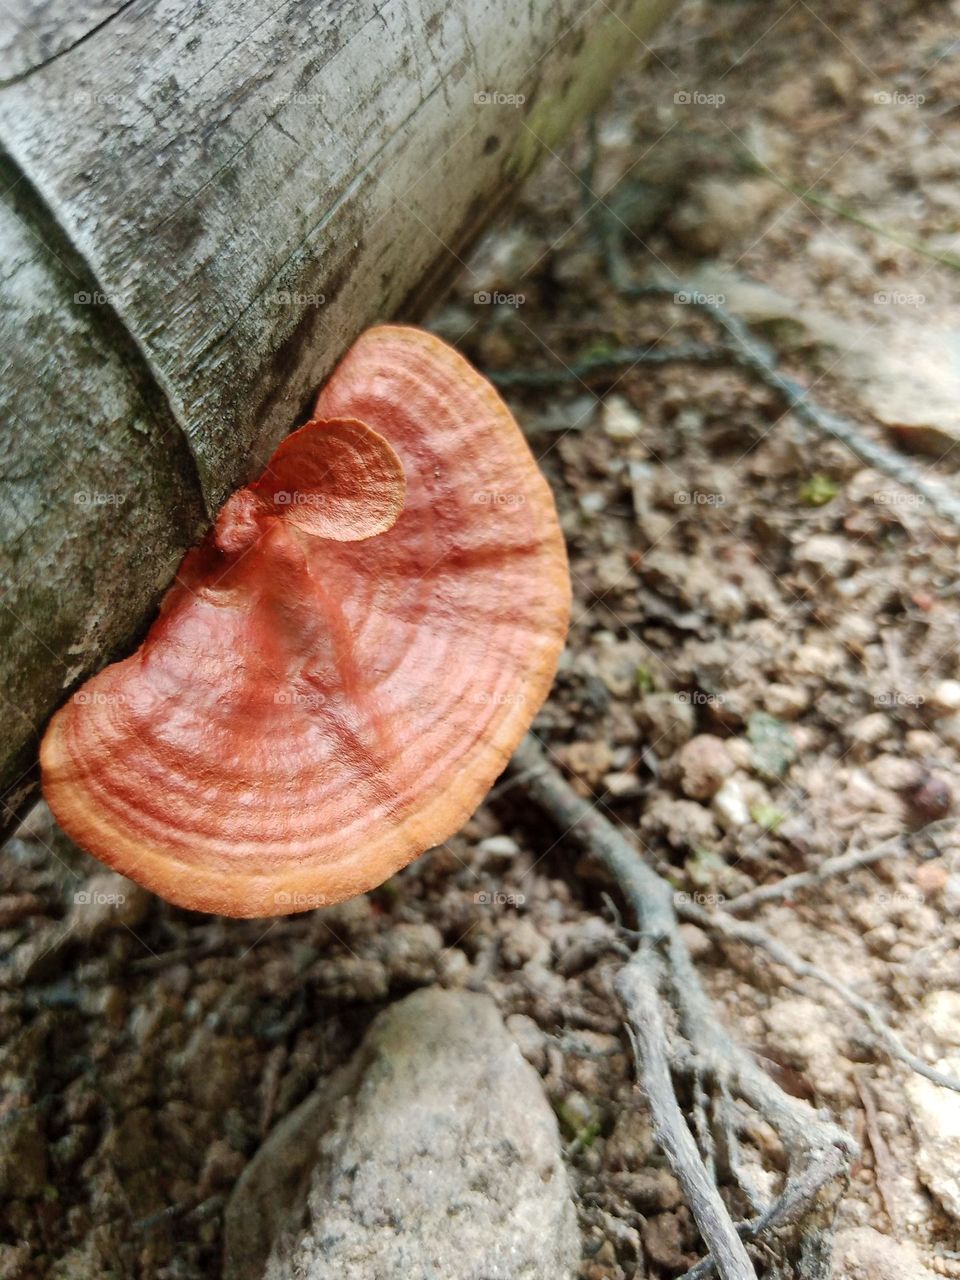 A type of mushroom that is not eaten.